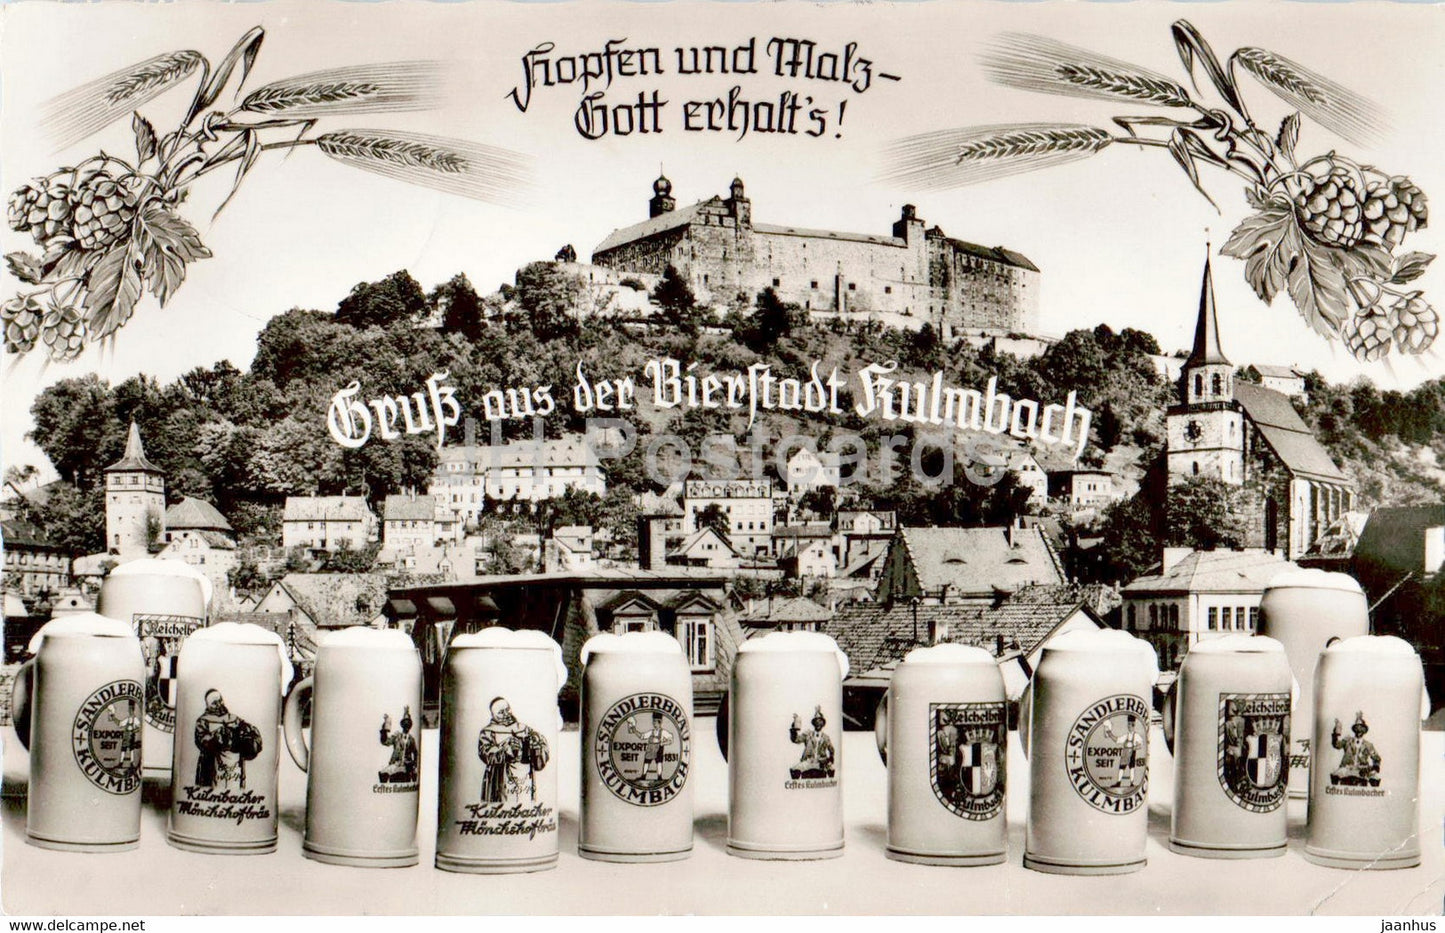 Gruss aus der Bierstadt Kulmbach - beer - old postcard - 1954 - Germany - used - JH Postcards